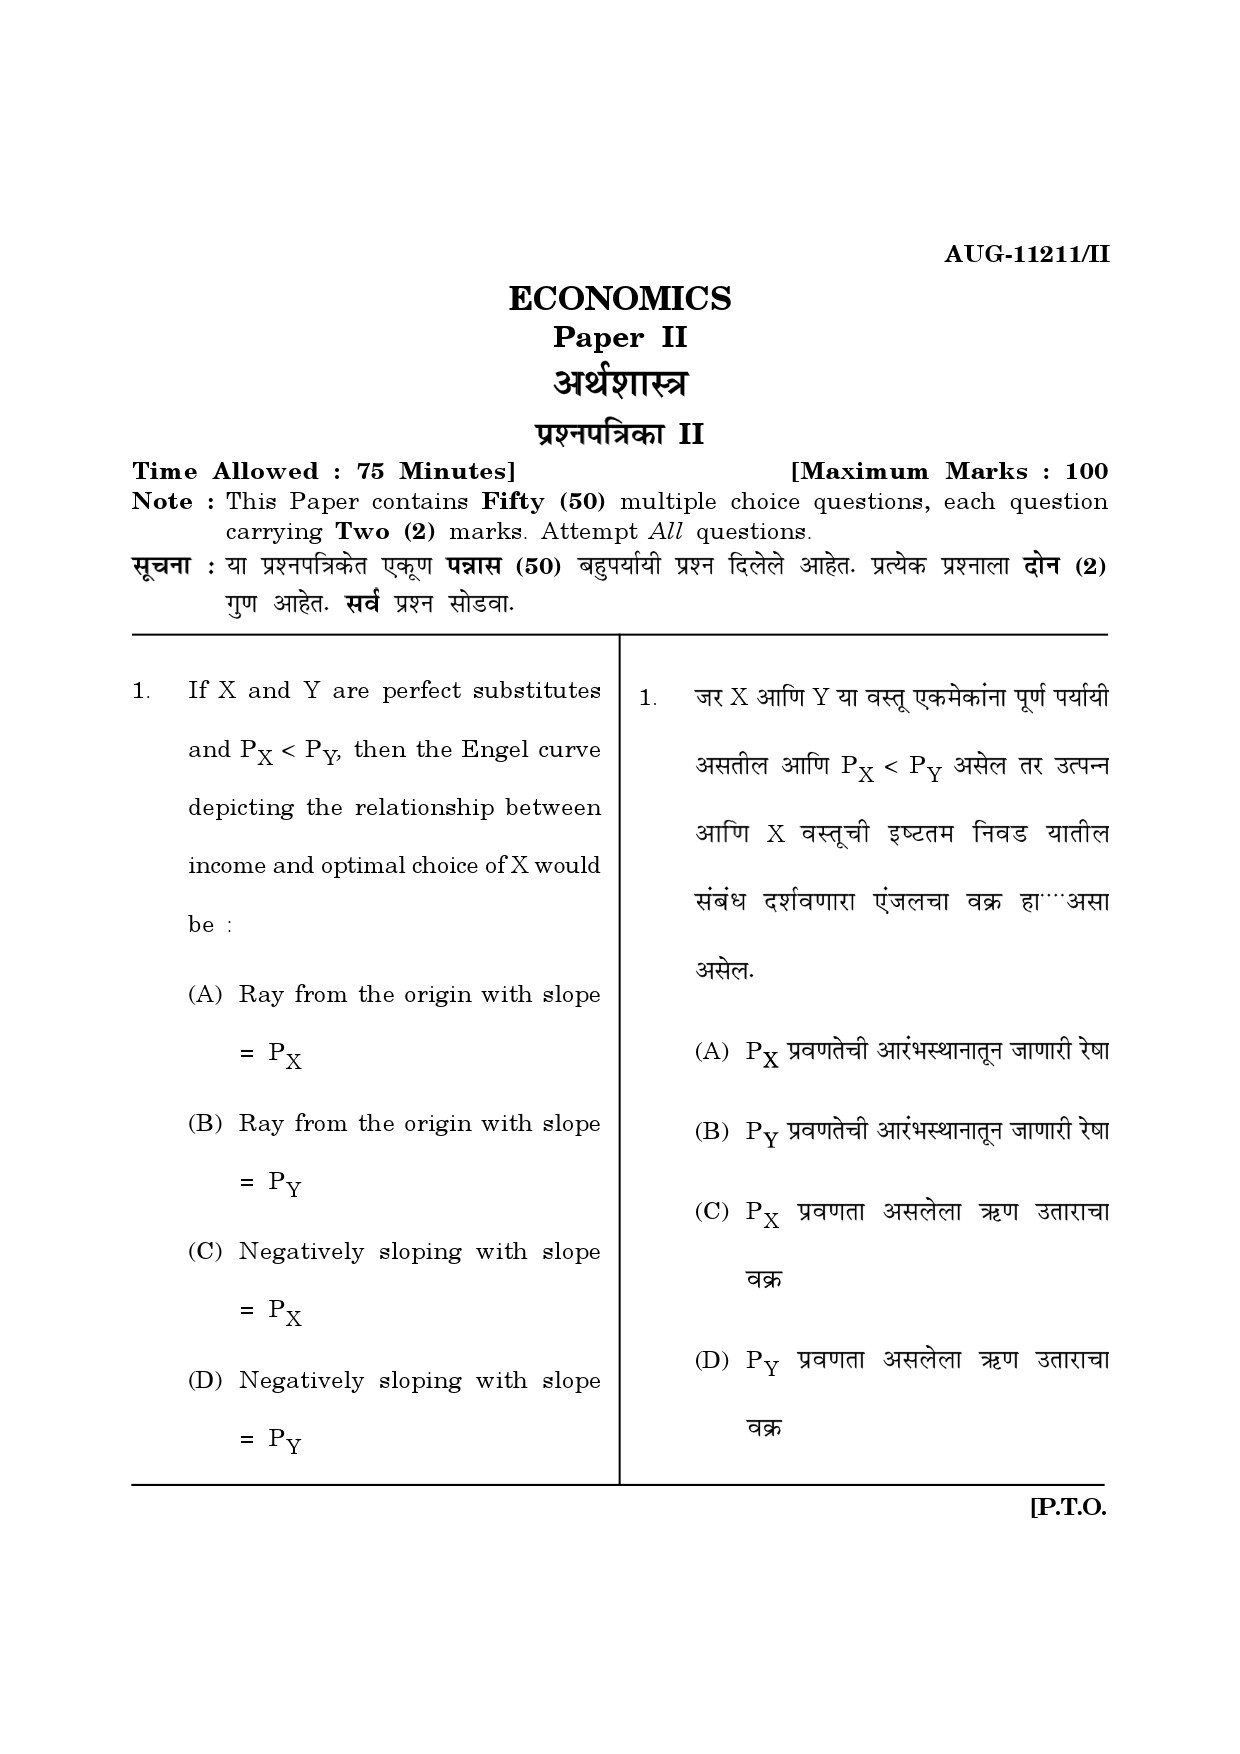 Maharashtra SET Economics Question Paper II August 2011 1